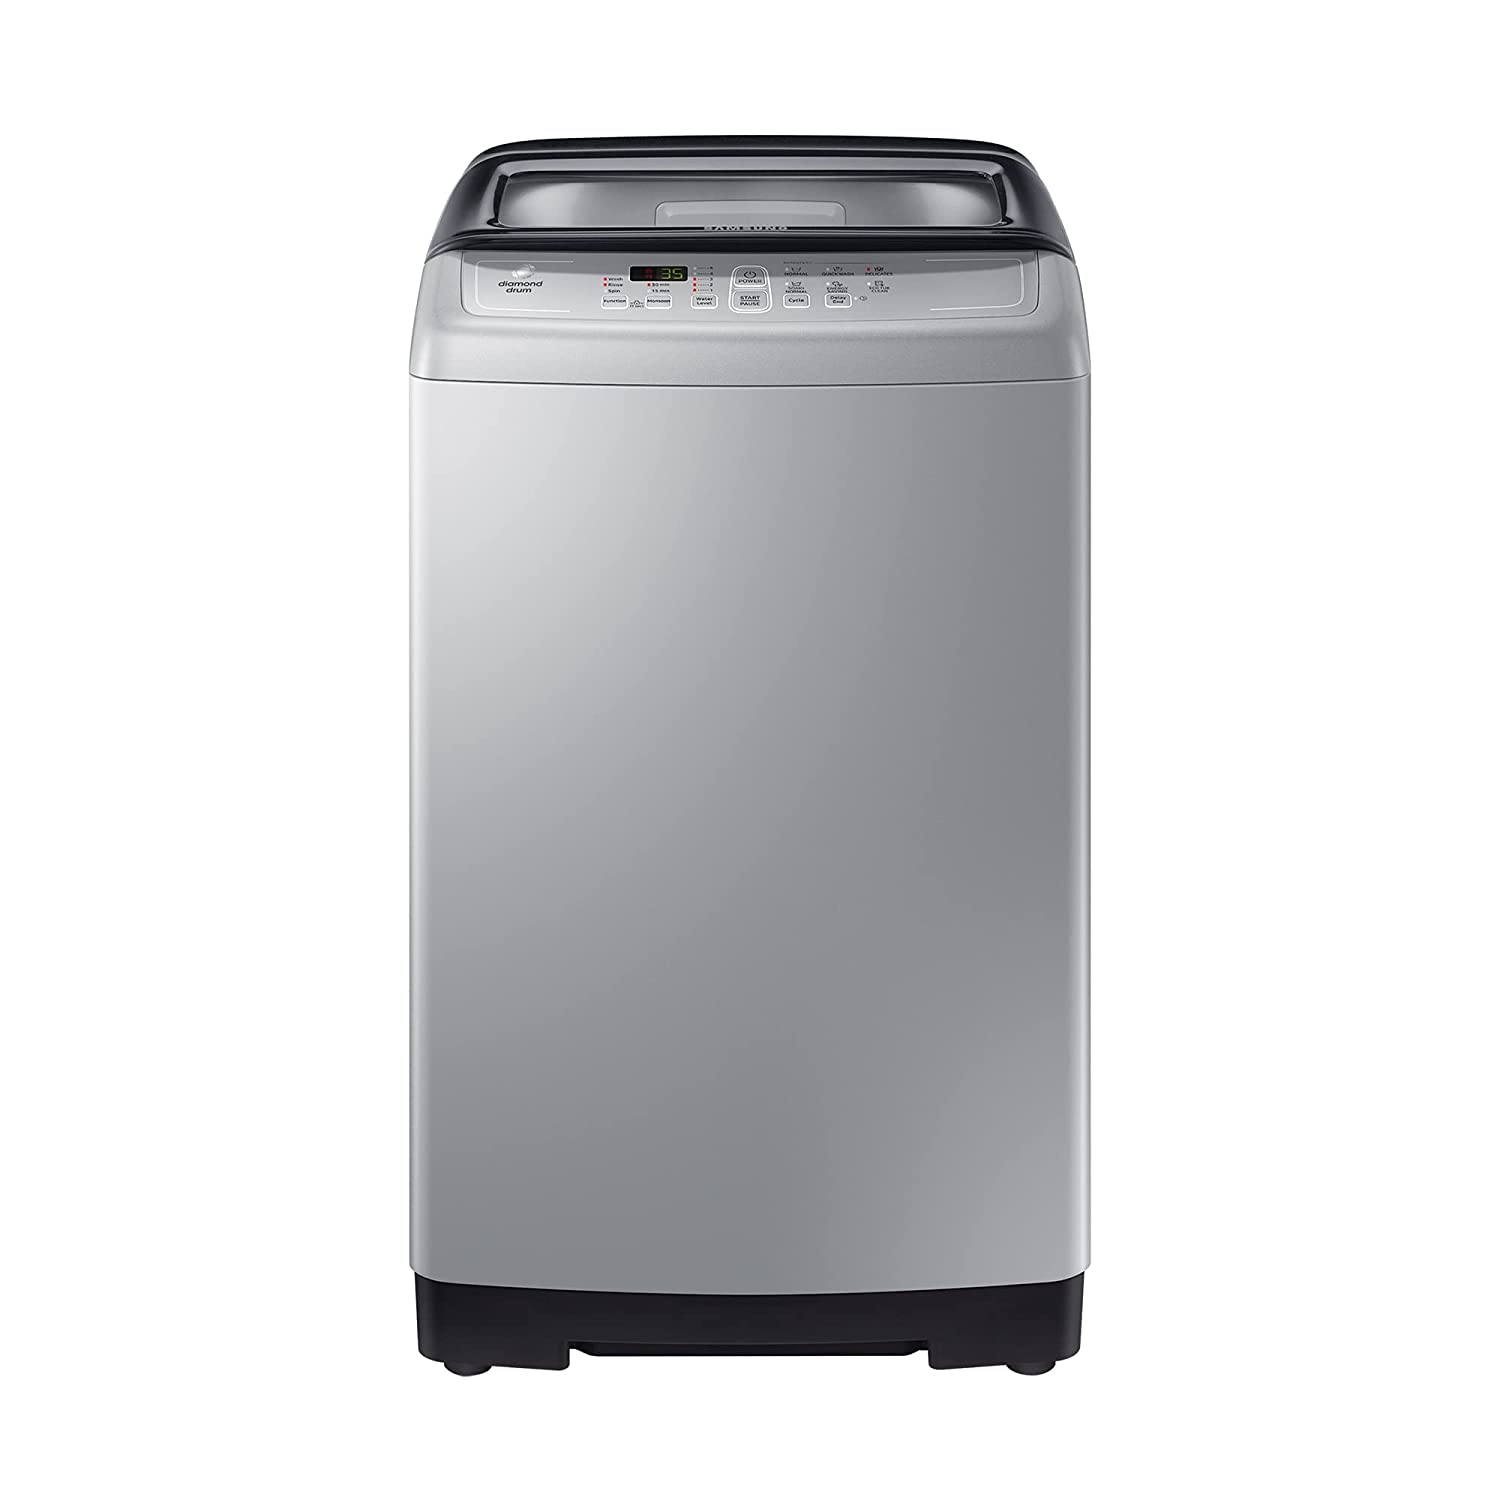 Samsung 6.5 Kg Automatic Washing Machine Offers